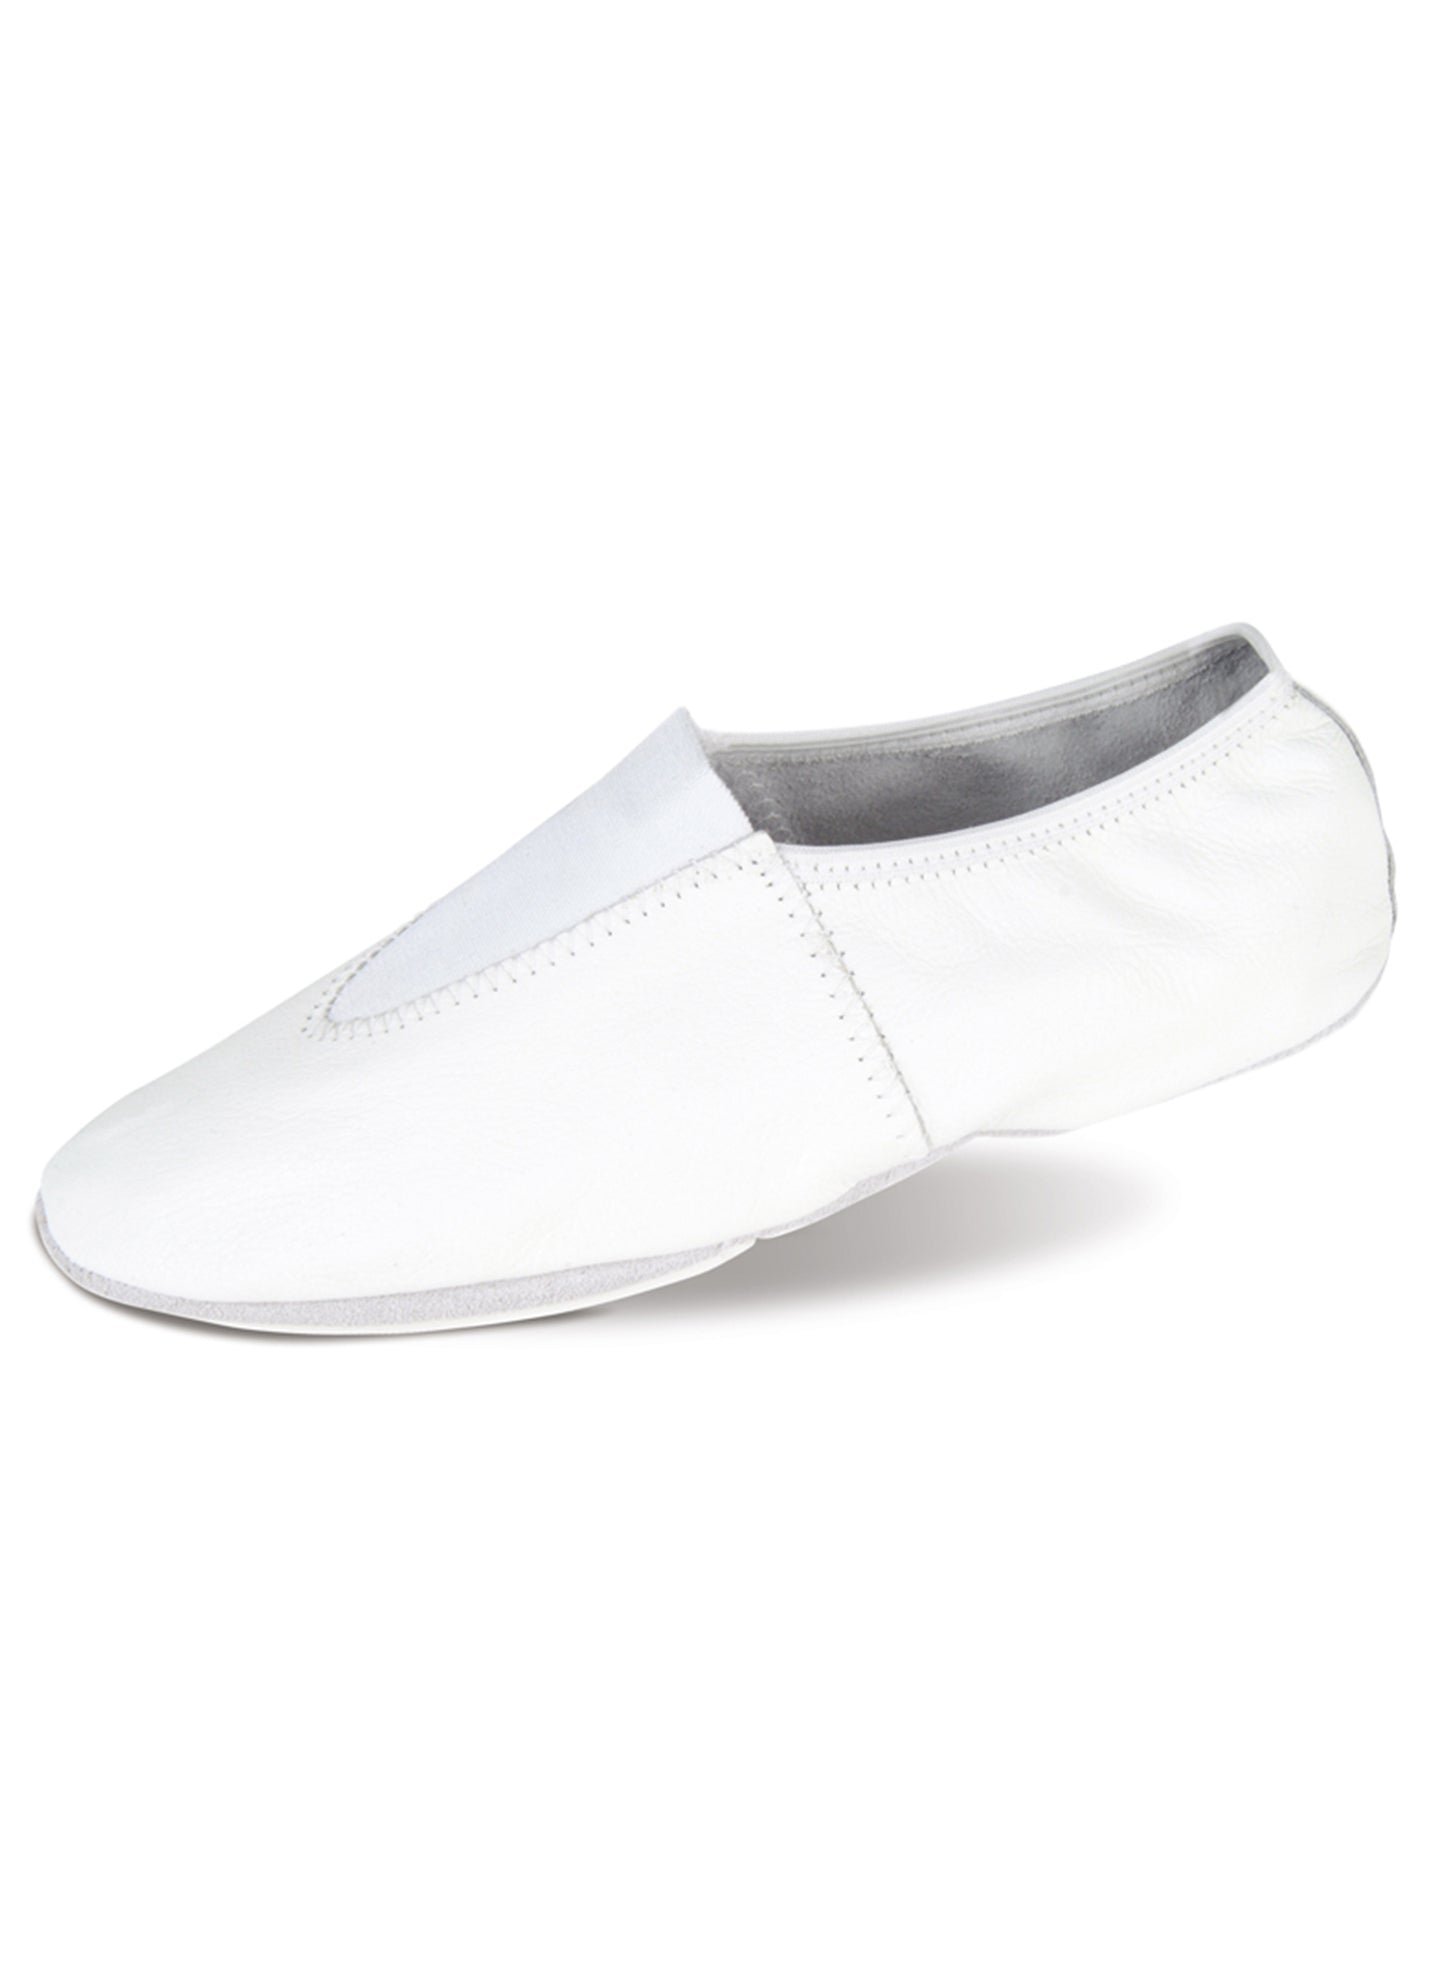 White Gymnastic Shoe 